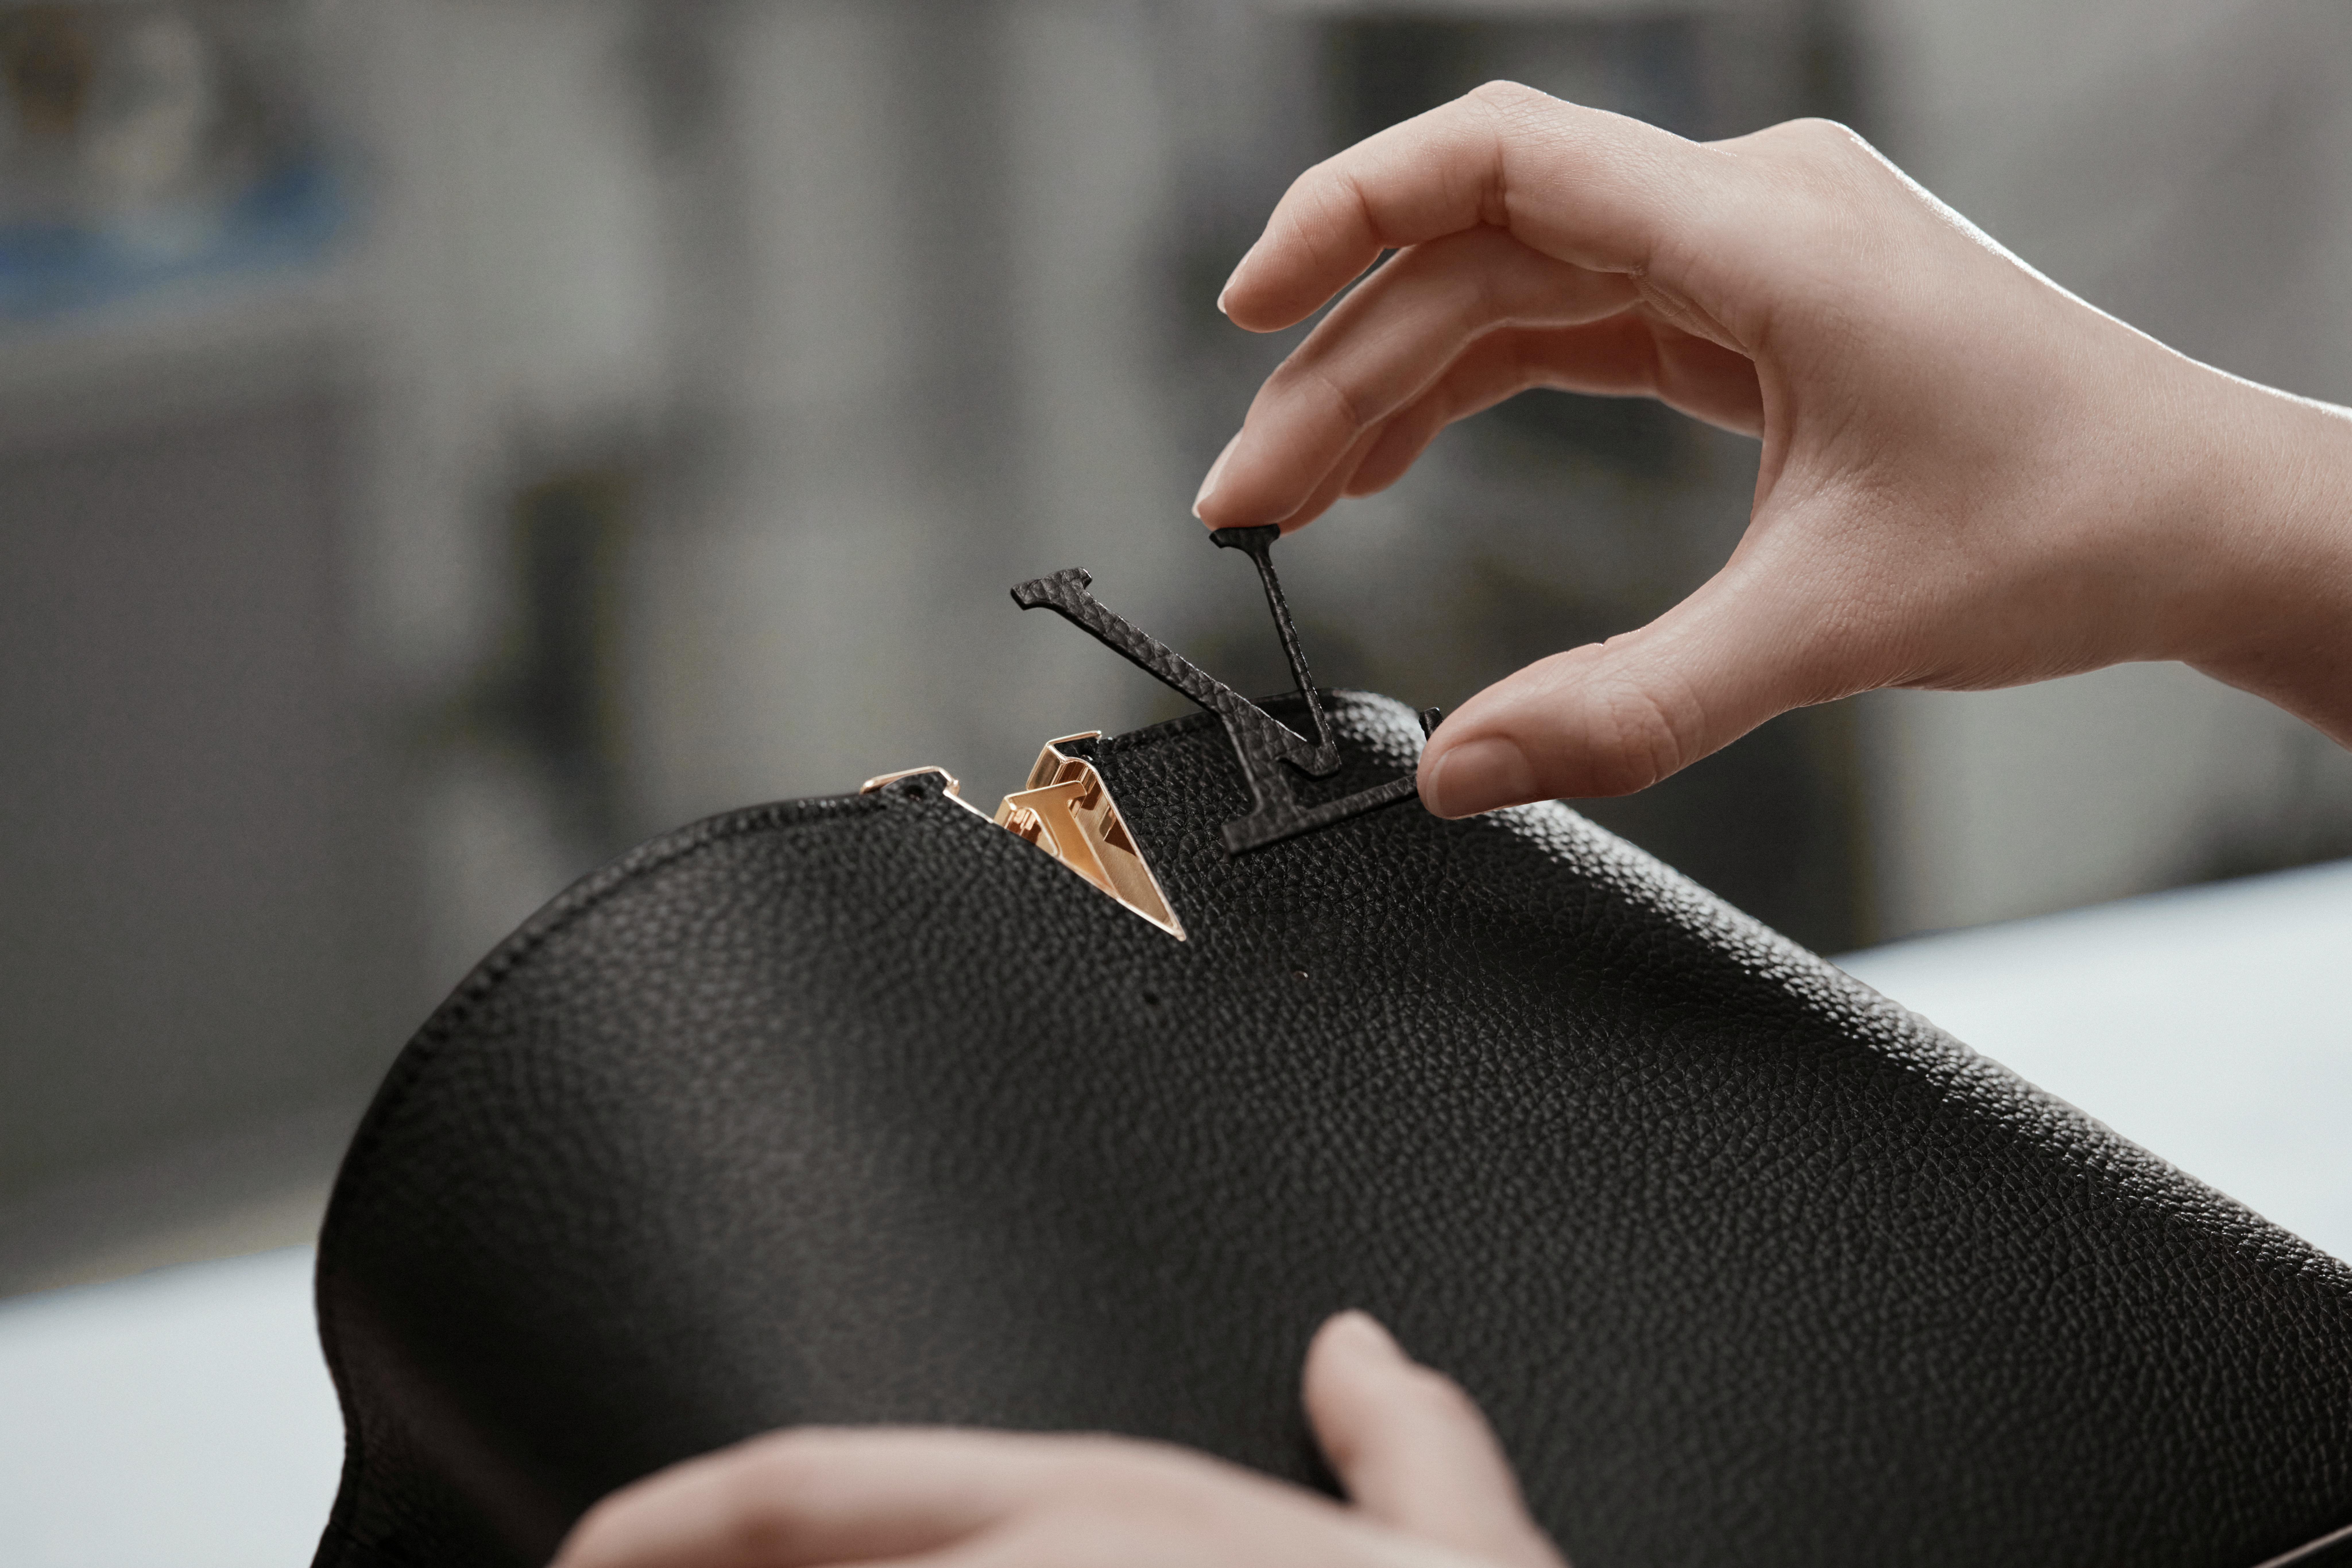 Louis Vuitton's New Handbags Look a Little Familiar